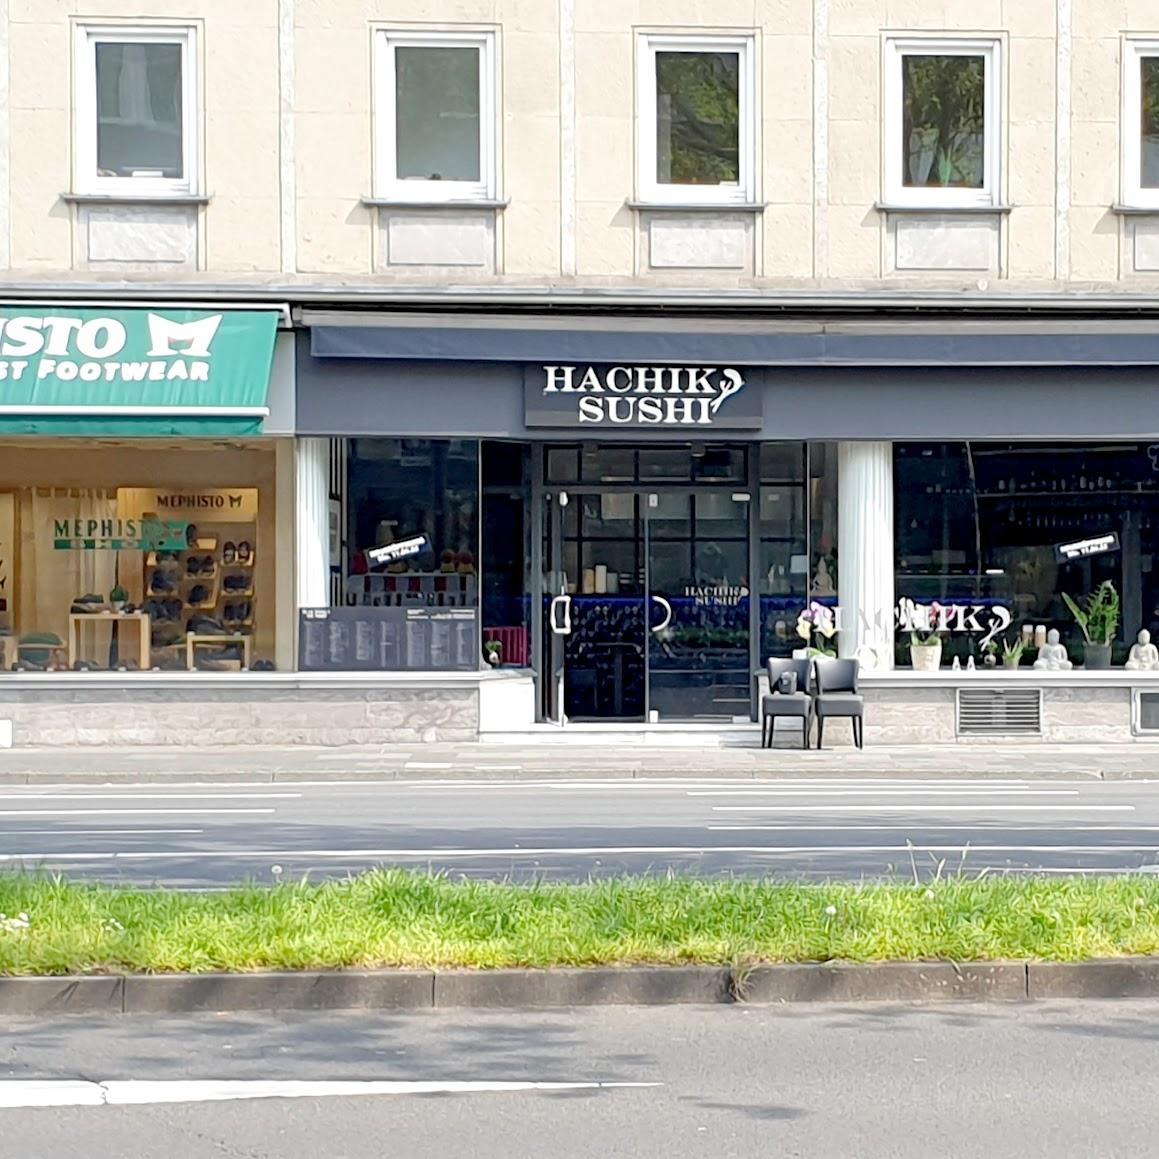 Restaurant "Hachiko Sushi" in Köln